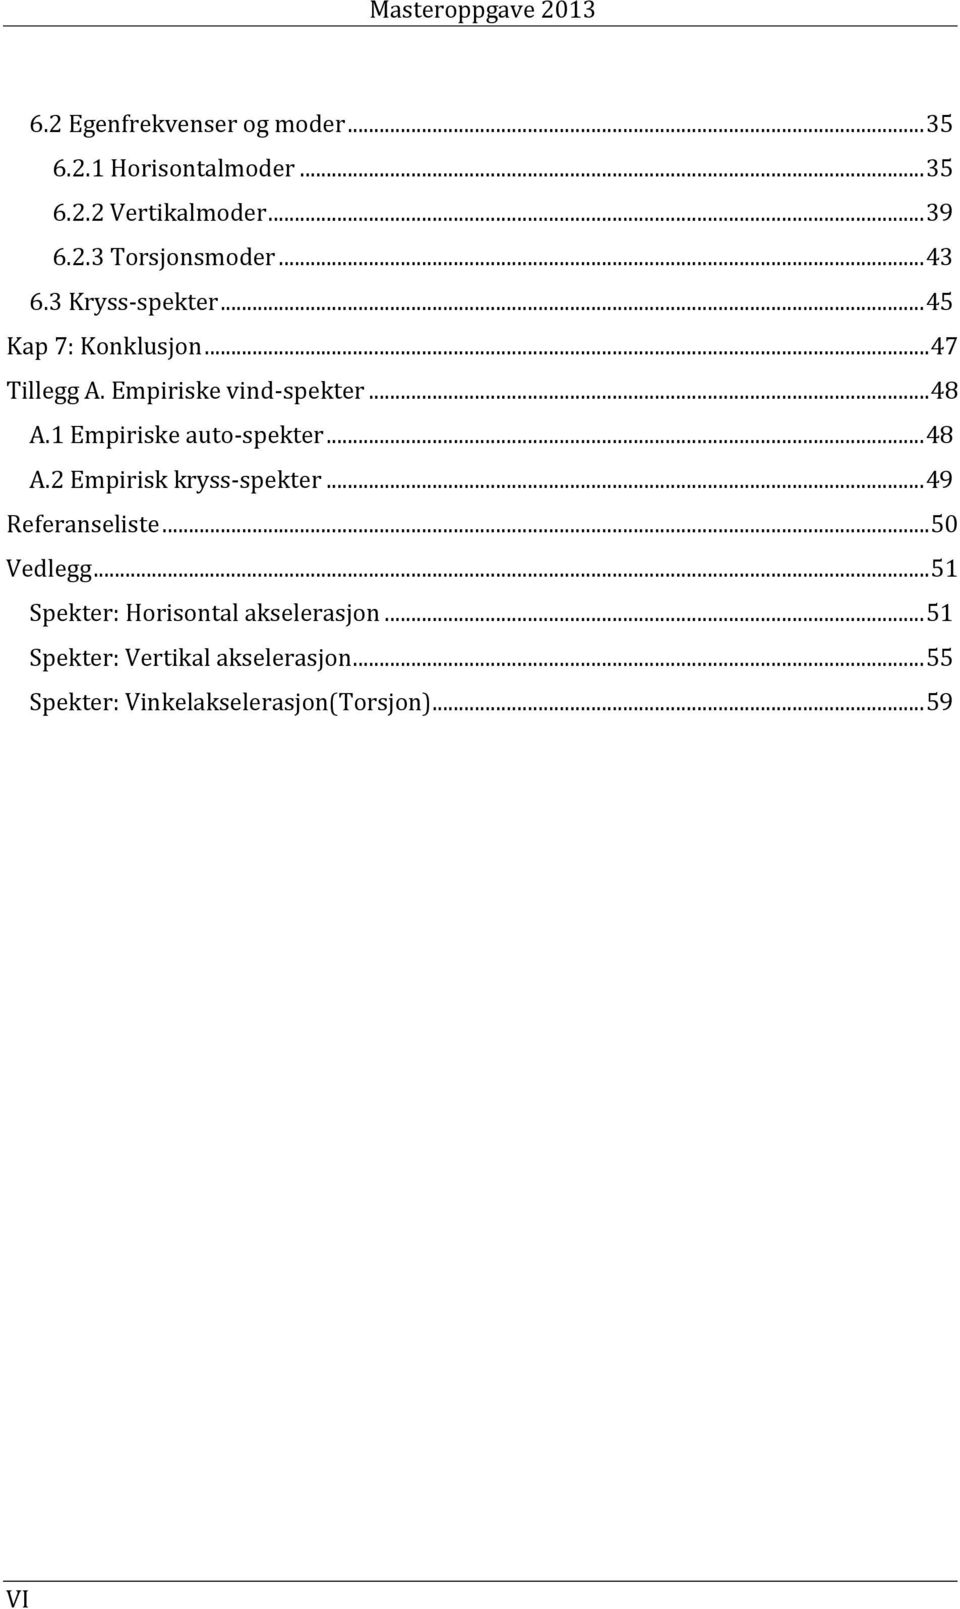 1 Empiriske auto-spekter... 48 A.2 Empirisk kryss-spekter... 49 Referanseliste... 50 Vedlegg.